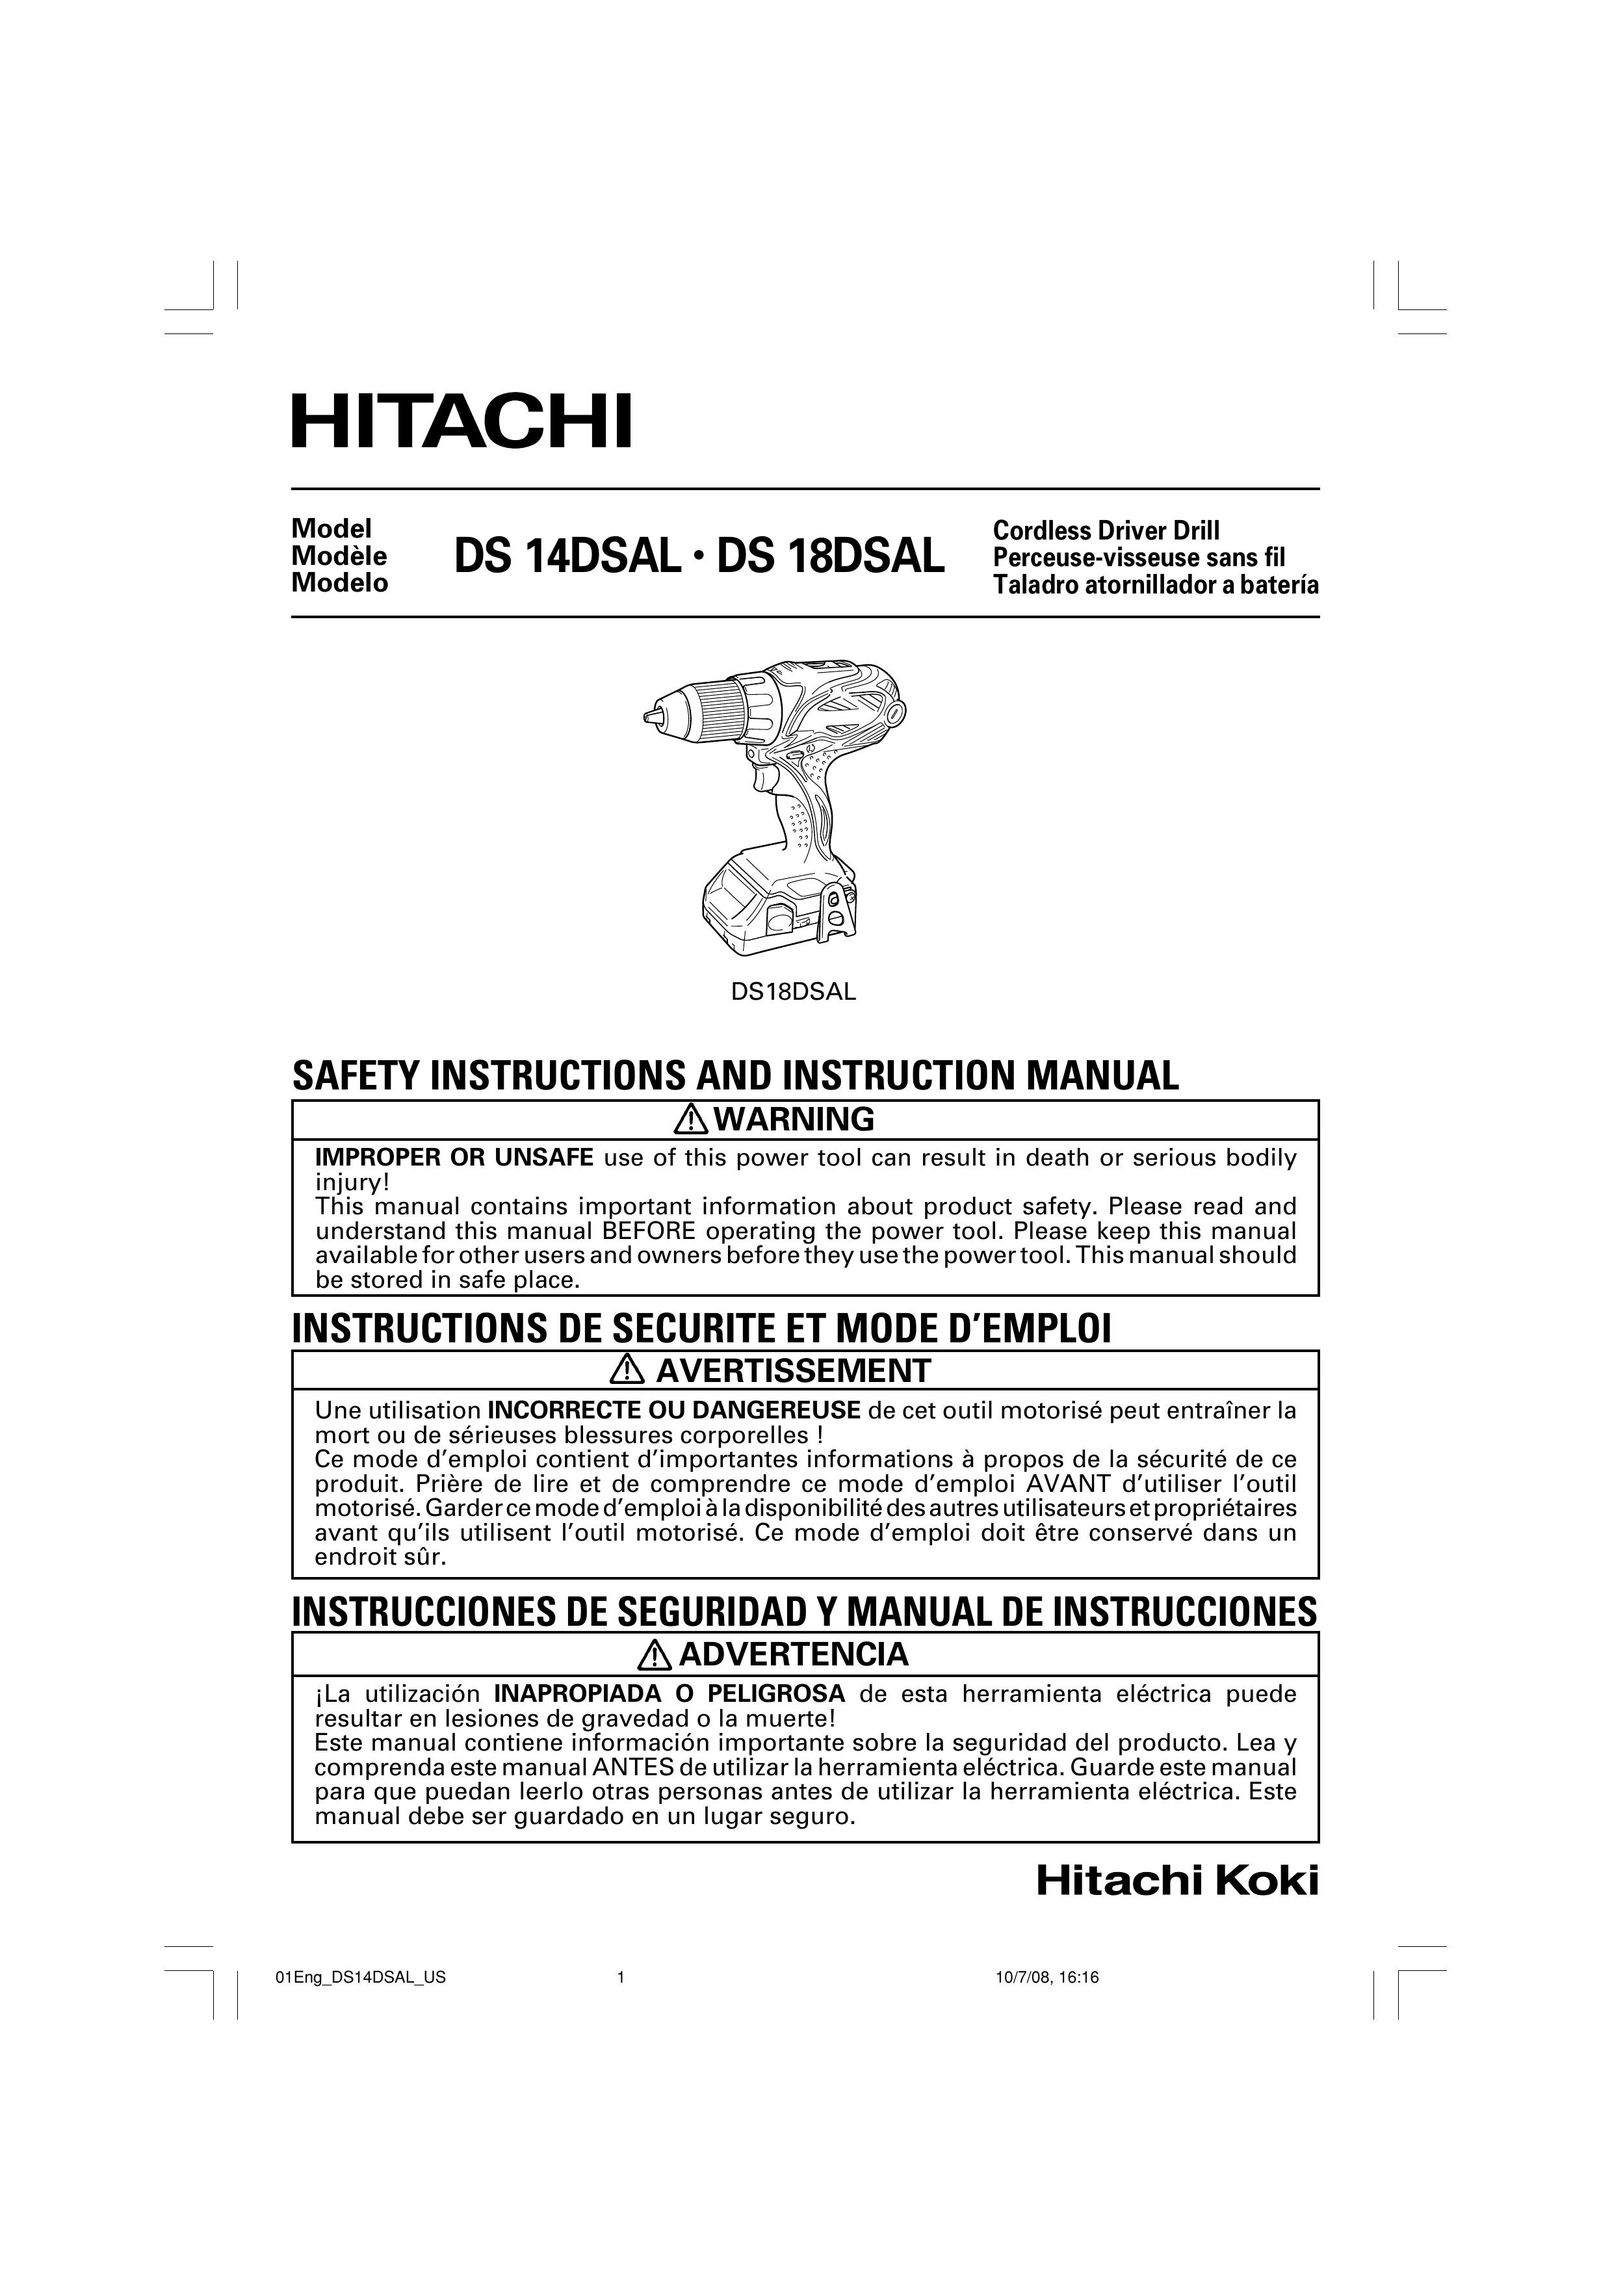 Hitachi DS 18DSAL Cordless Drill User Manual